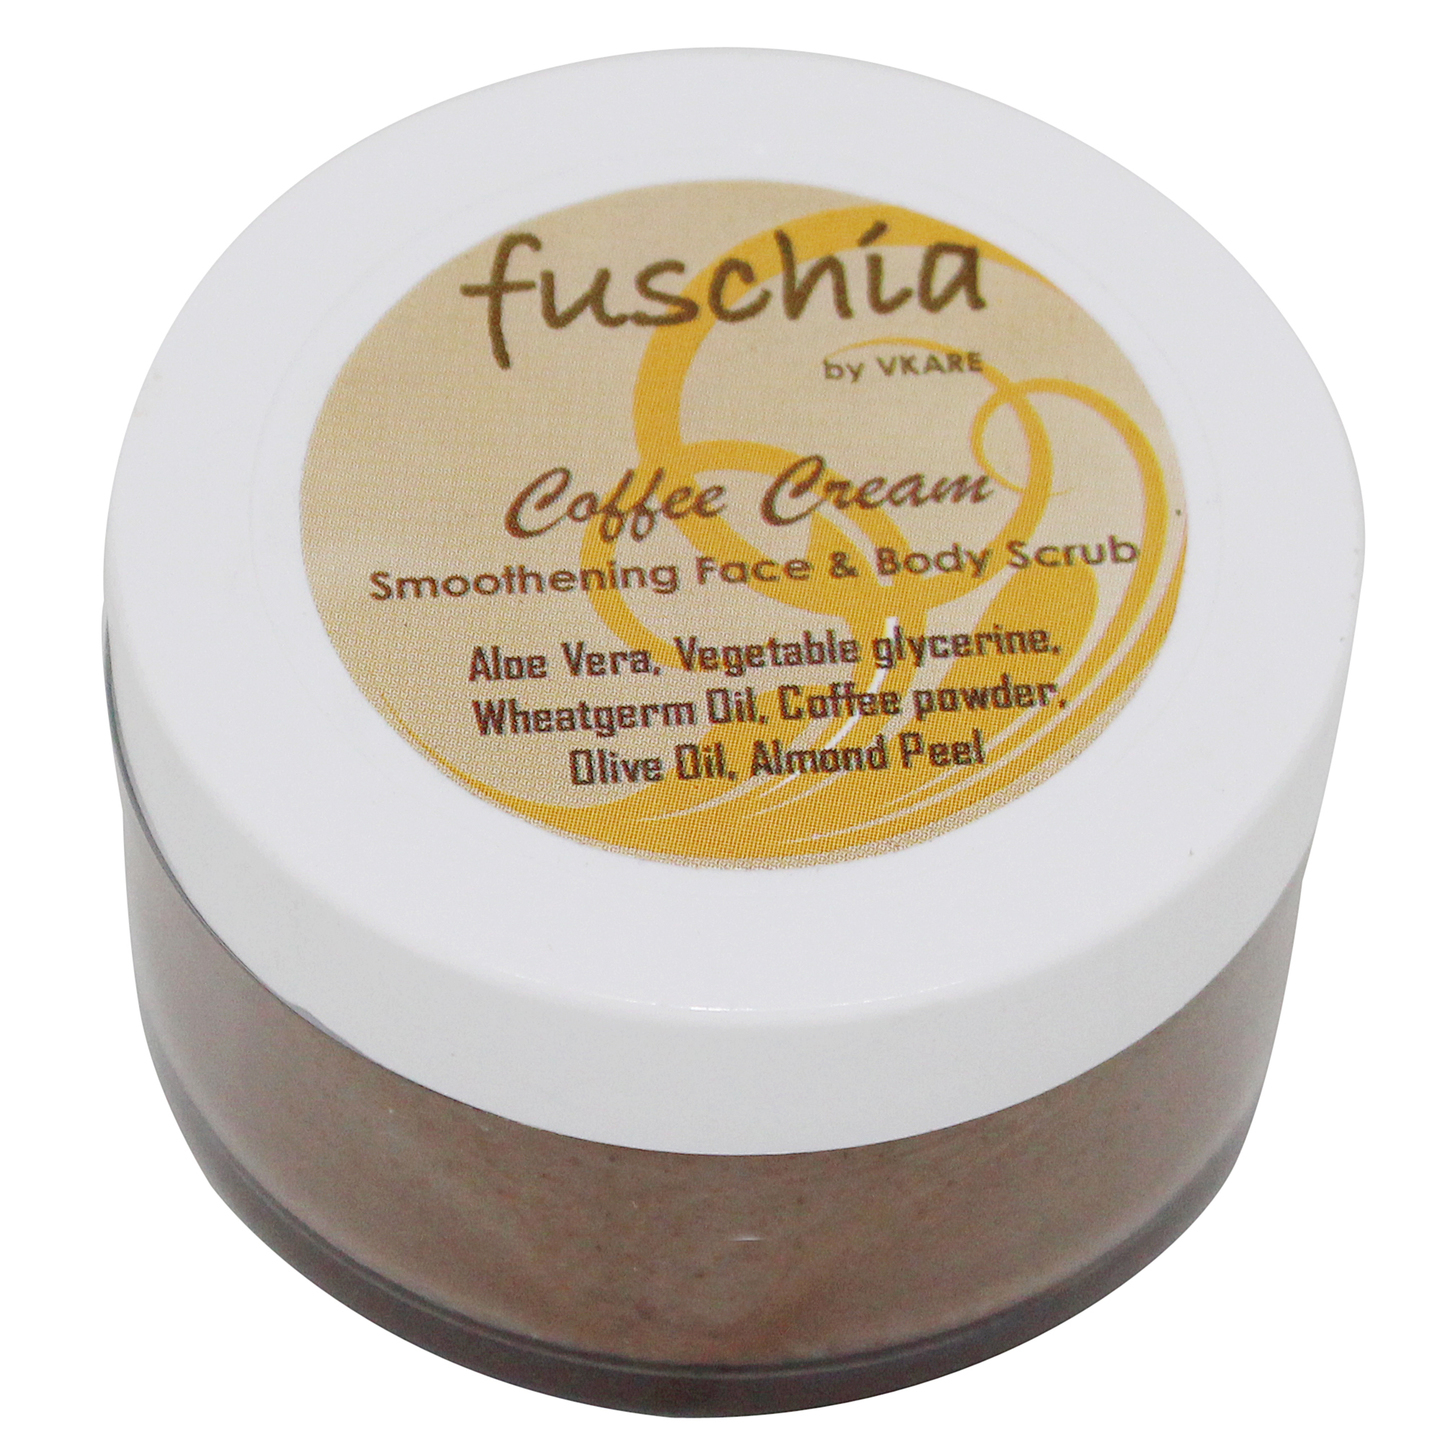 Fuschia - Coffee Cream - Smoothening Face & Body Scrub -50g